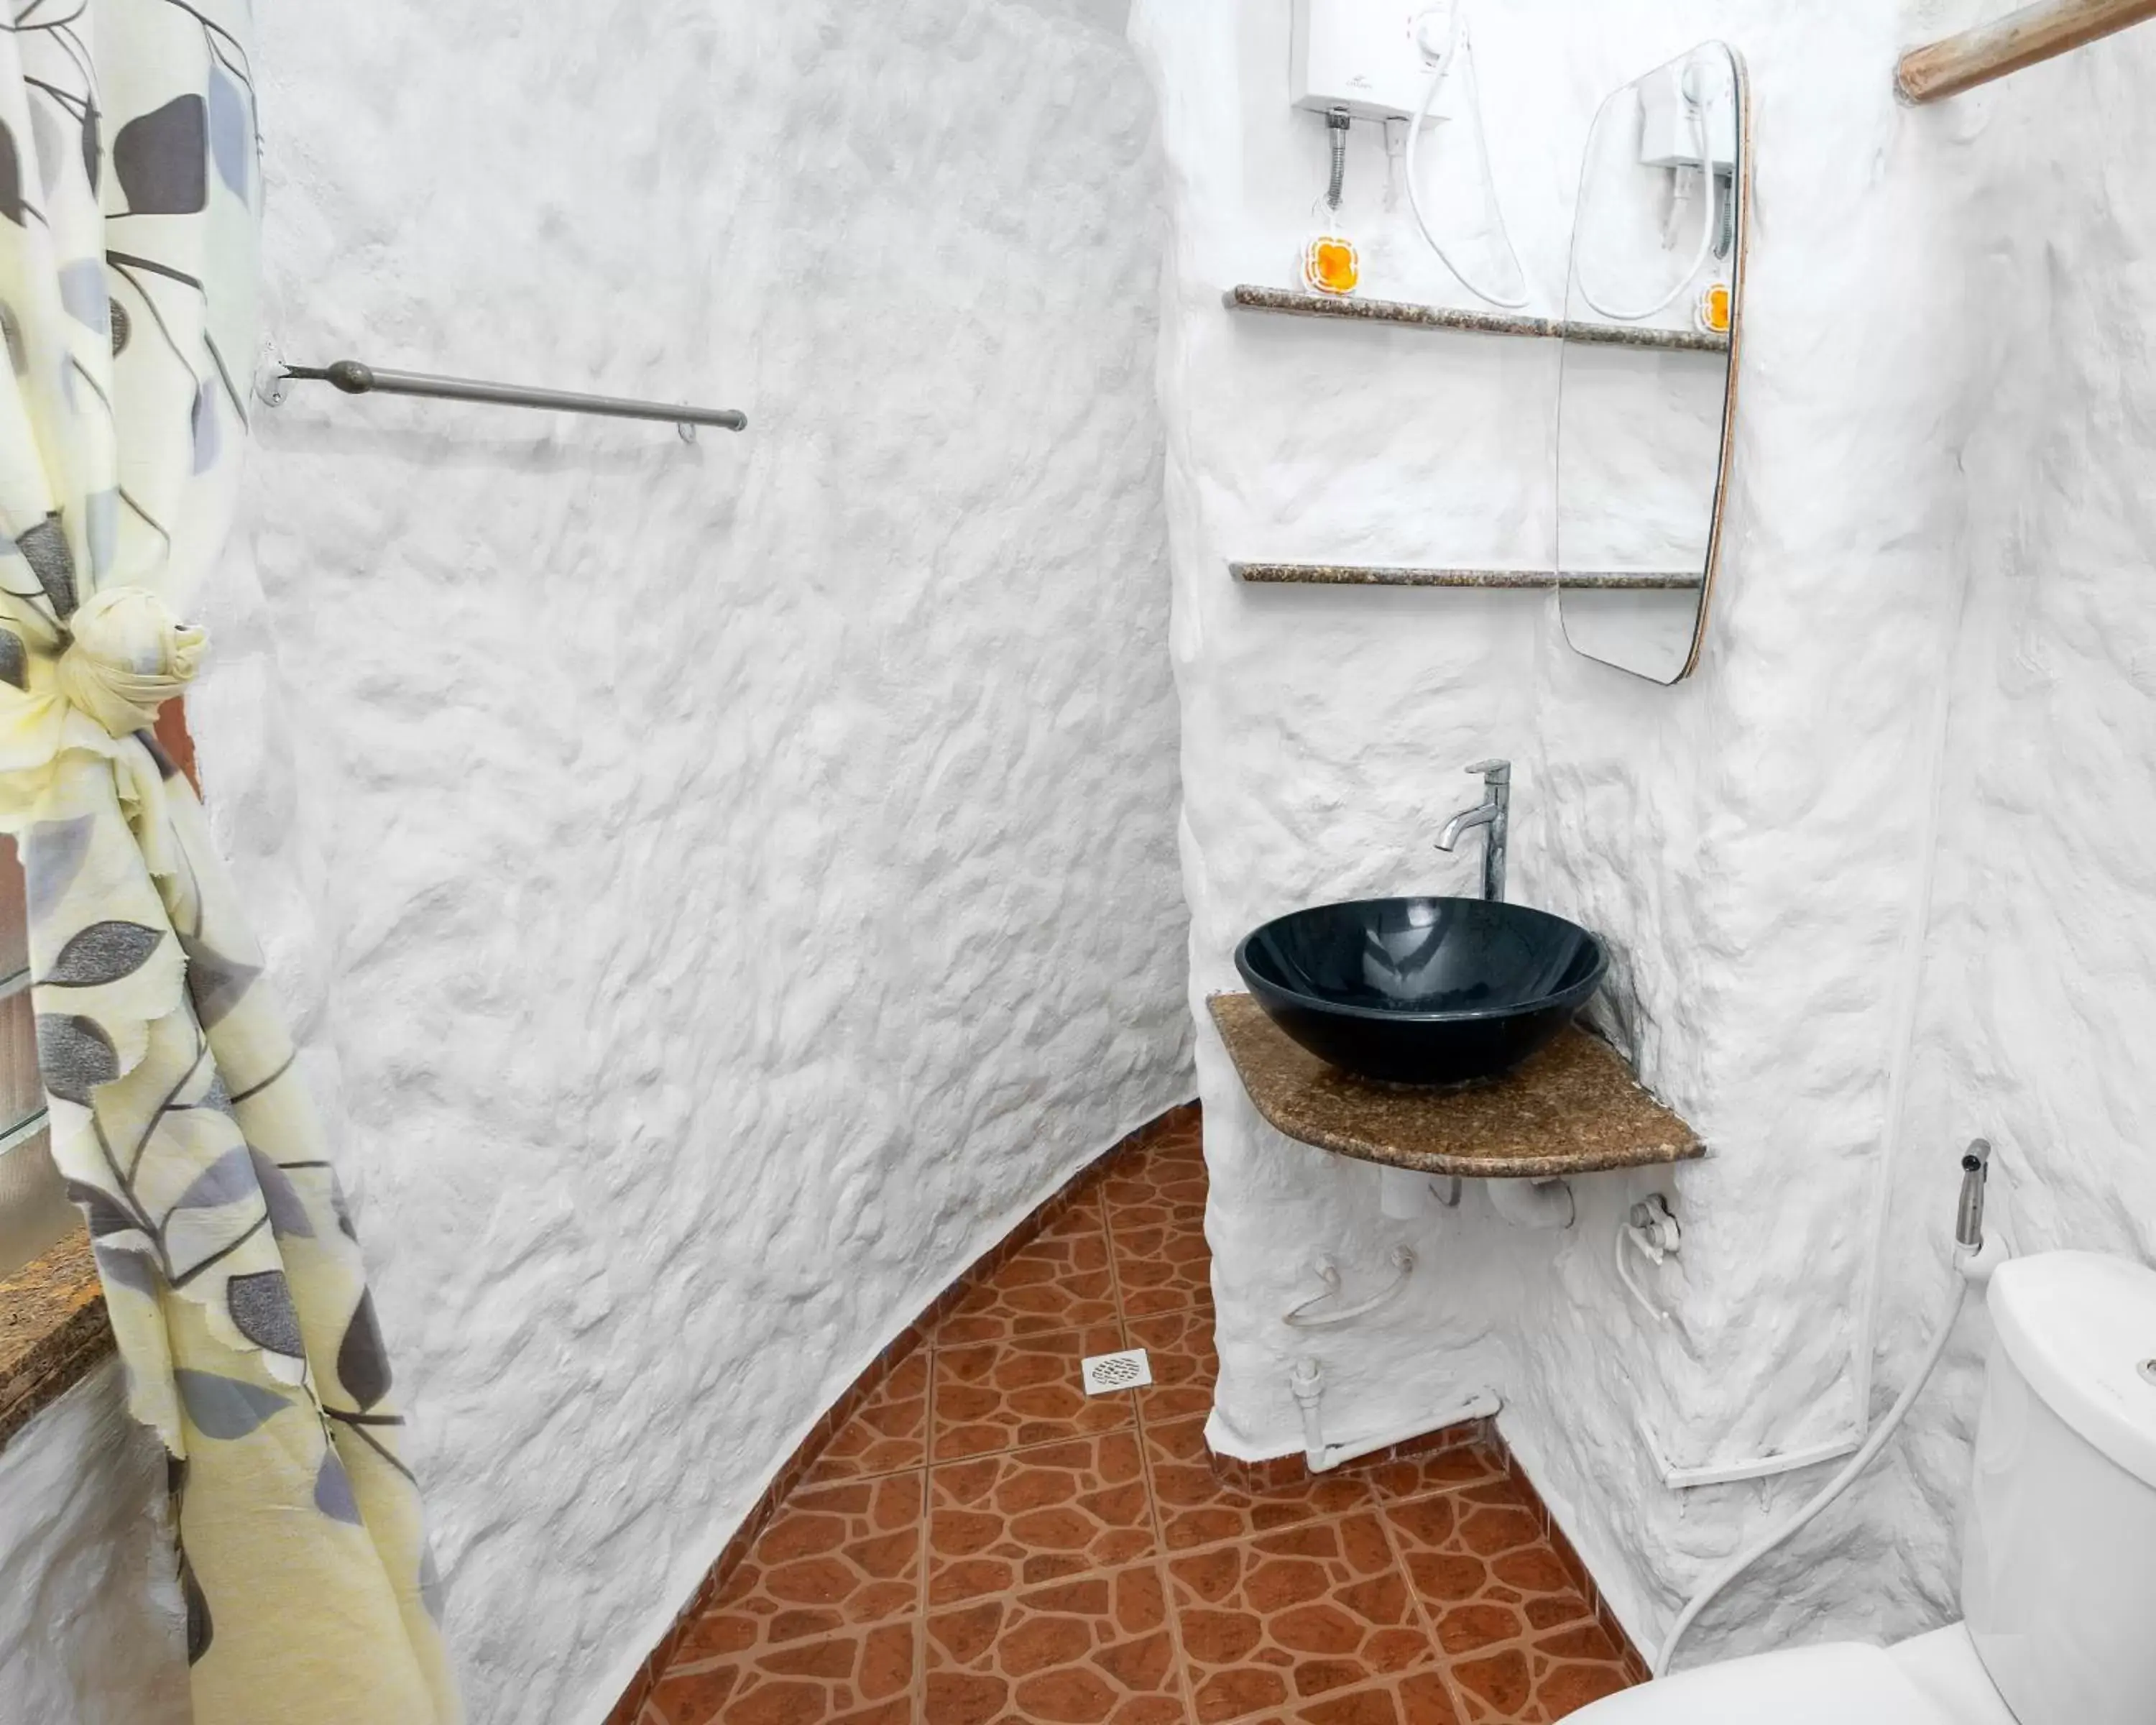 Bathroom in Panglao Chocolate Hills Resort